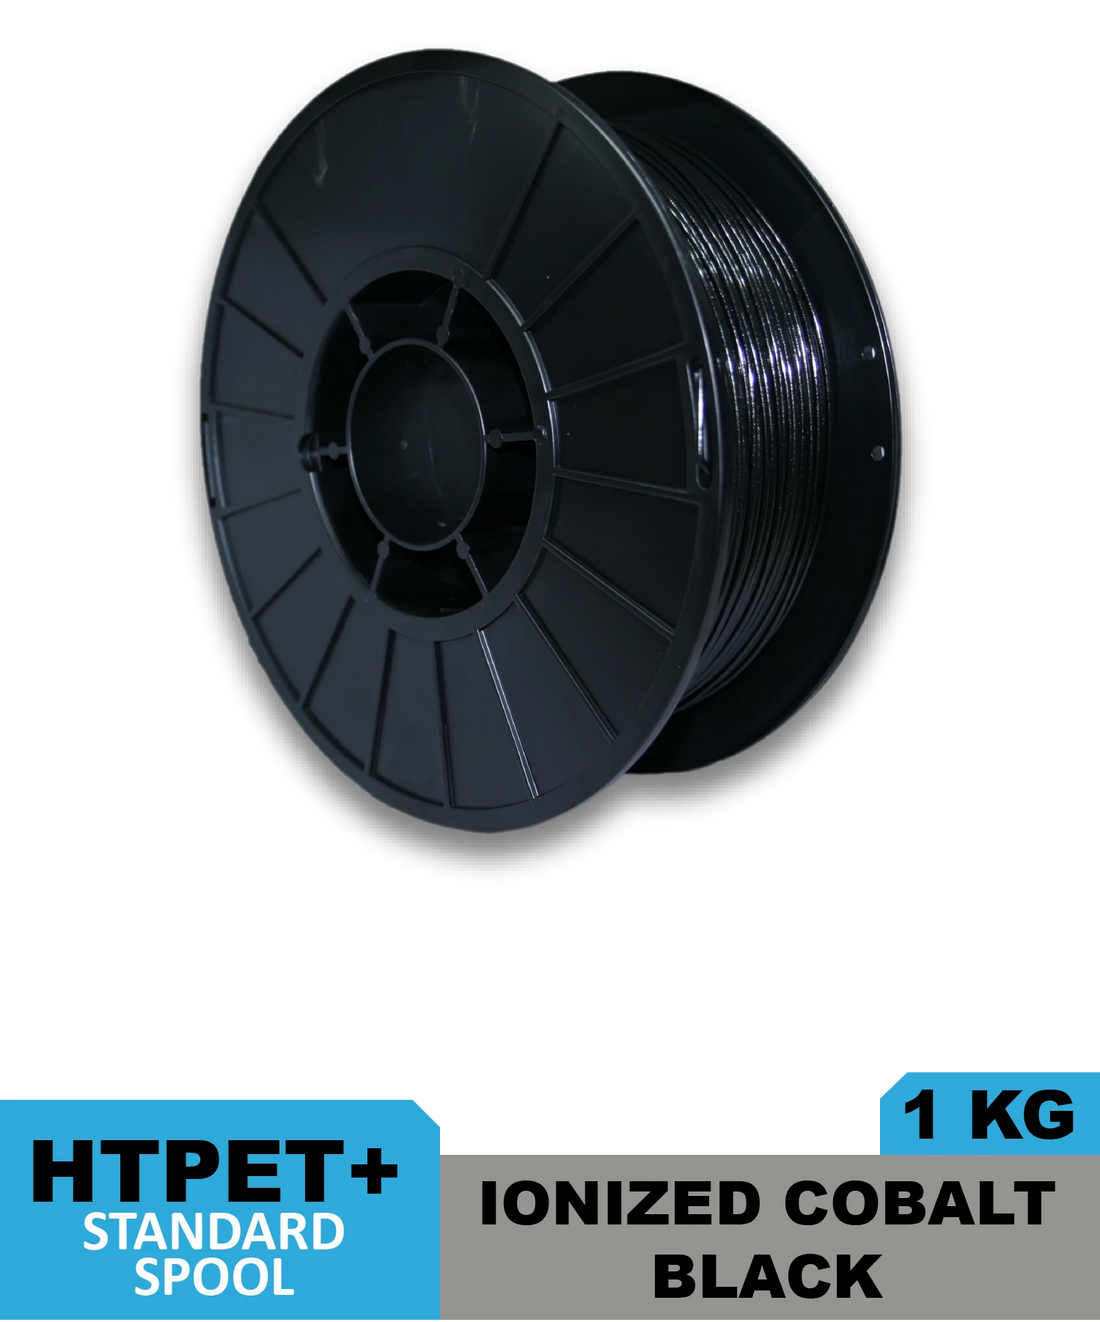 HTPET - Ionized Cobalt Black